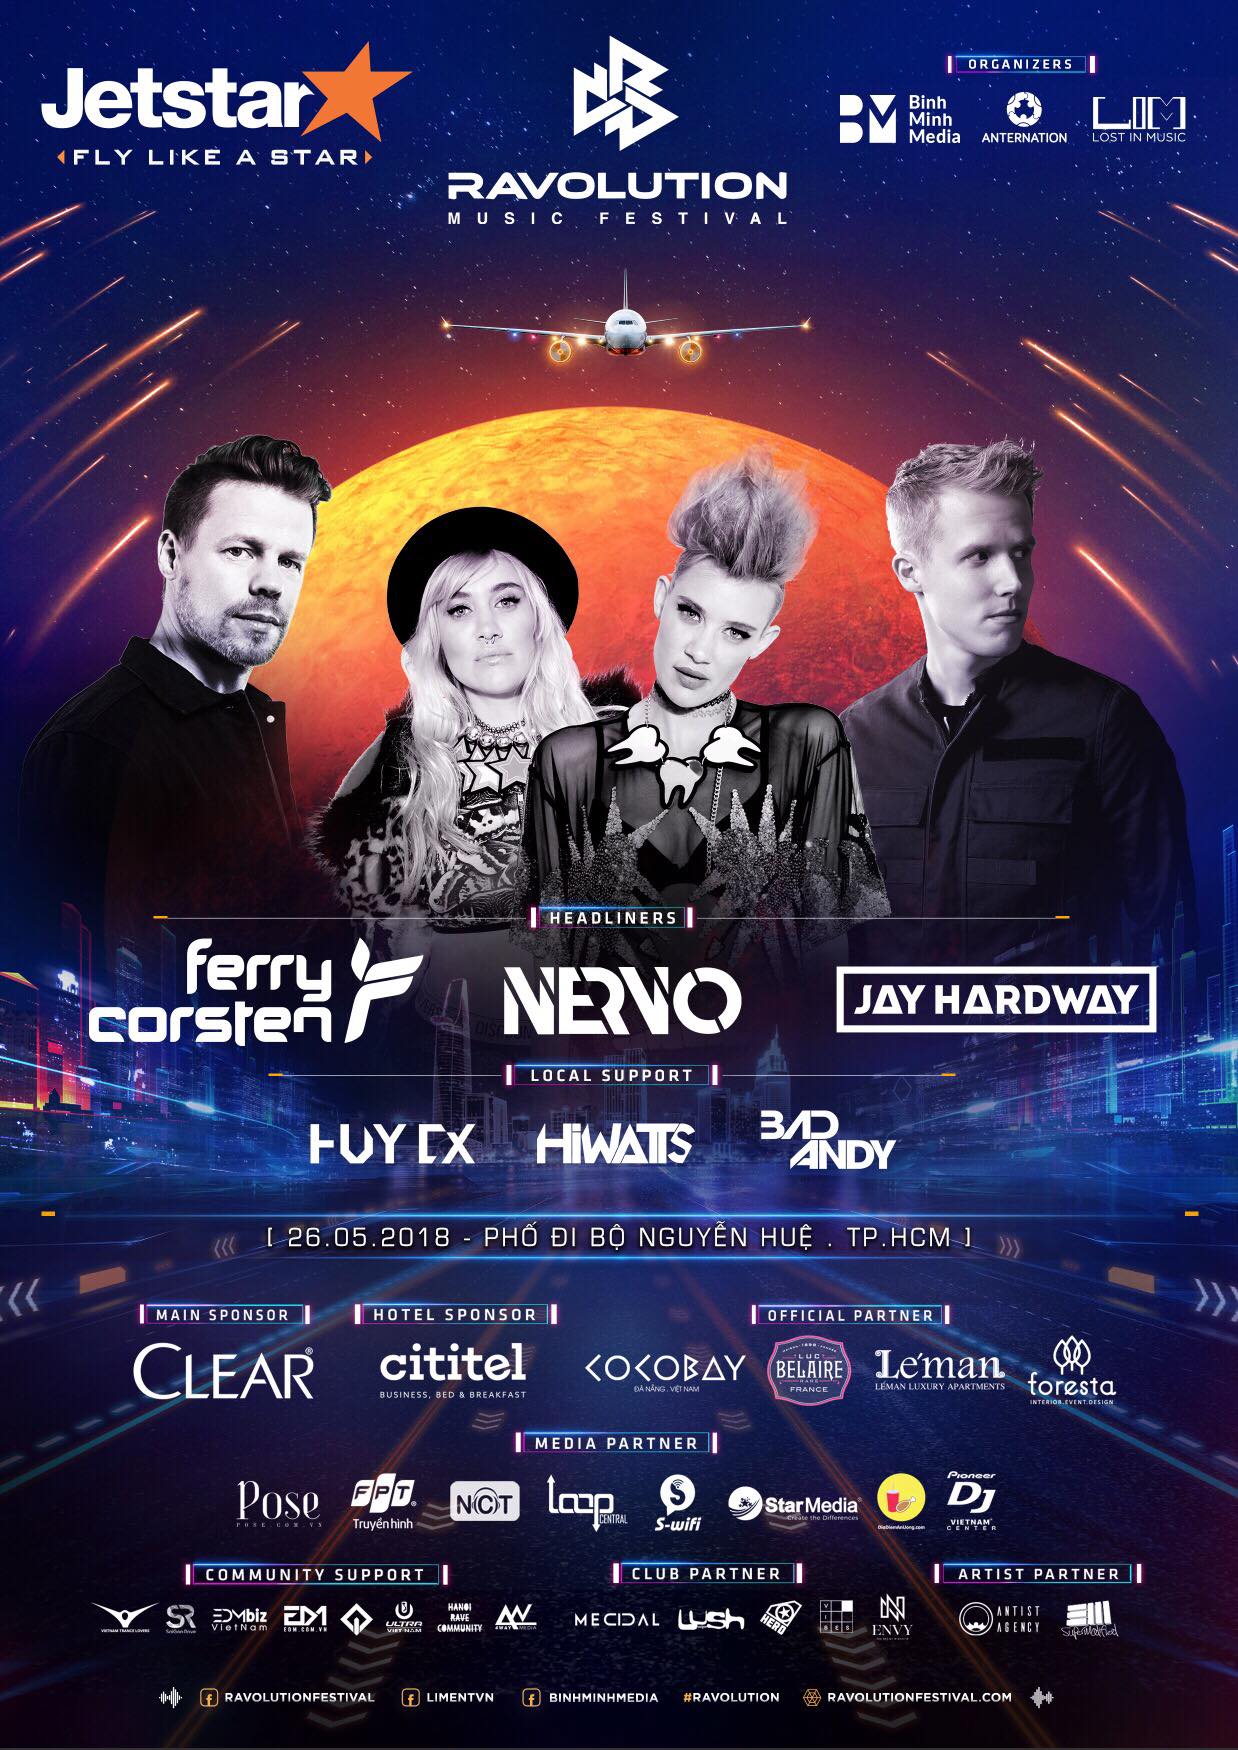 Ferry Corsten, NERVO & Jay Hardway to Headline Ravolution Music Festival by Jetstar 2018